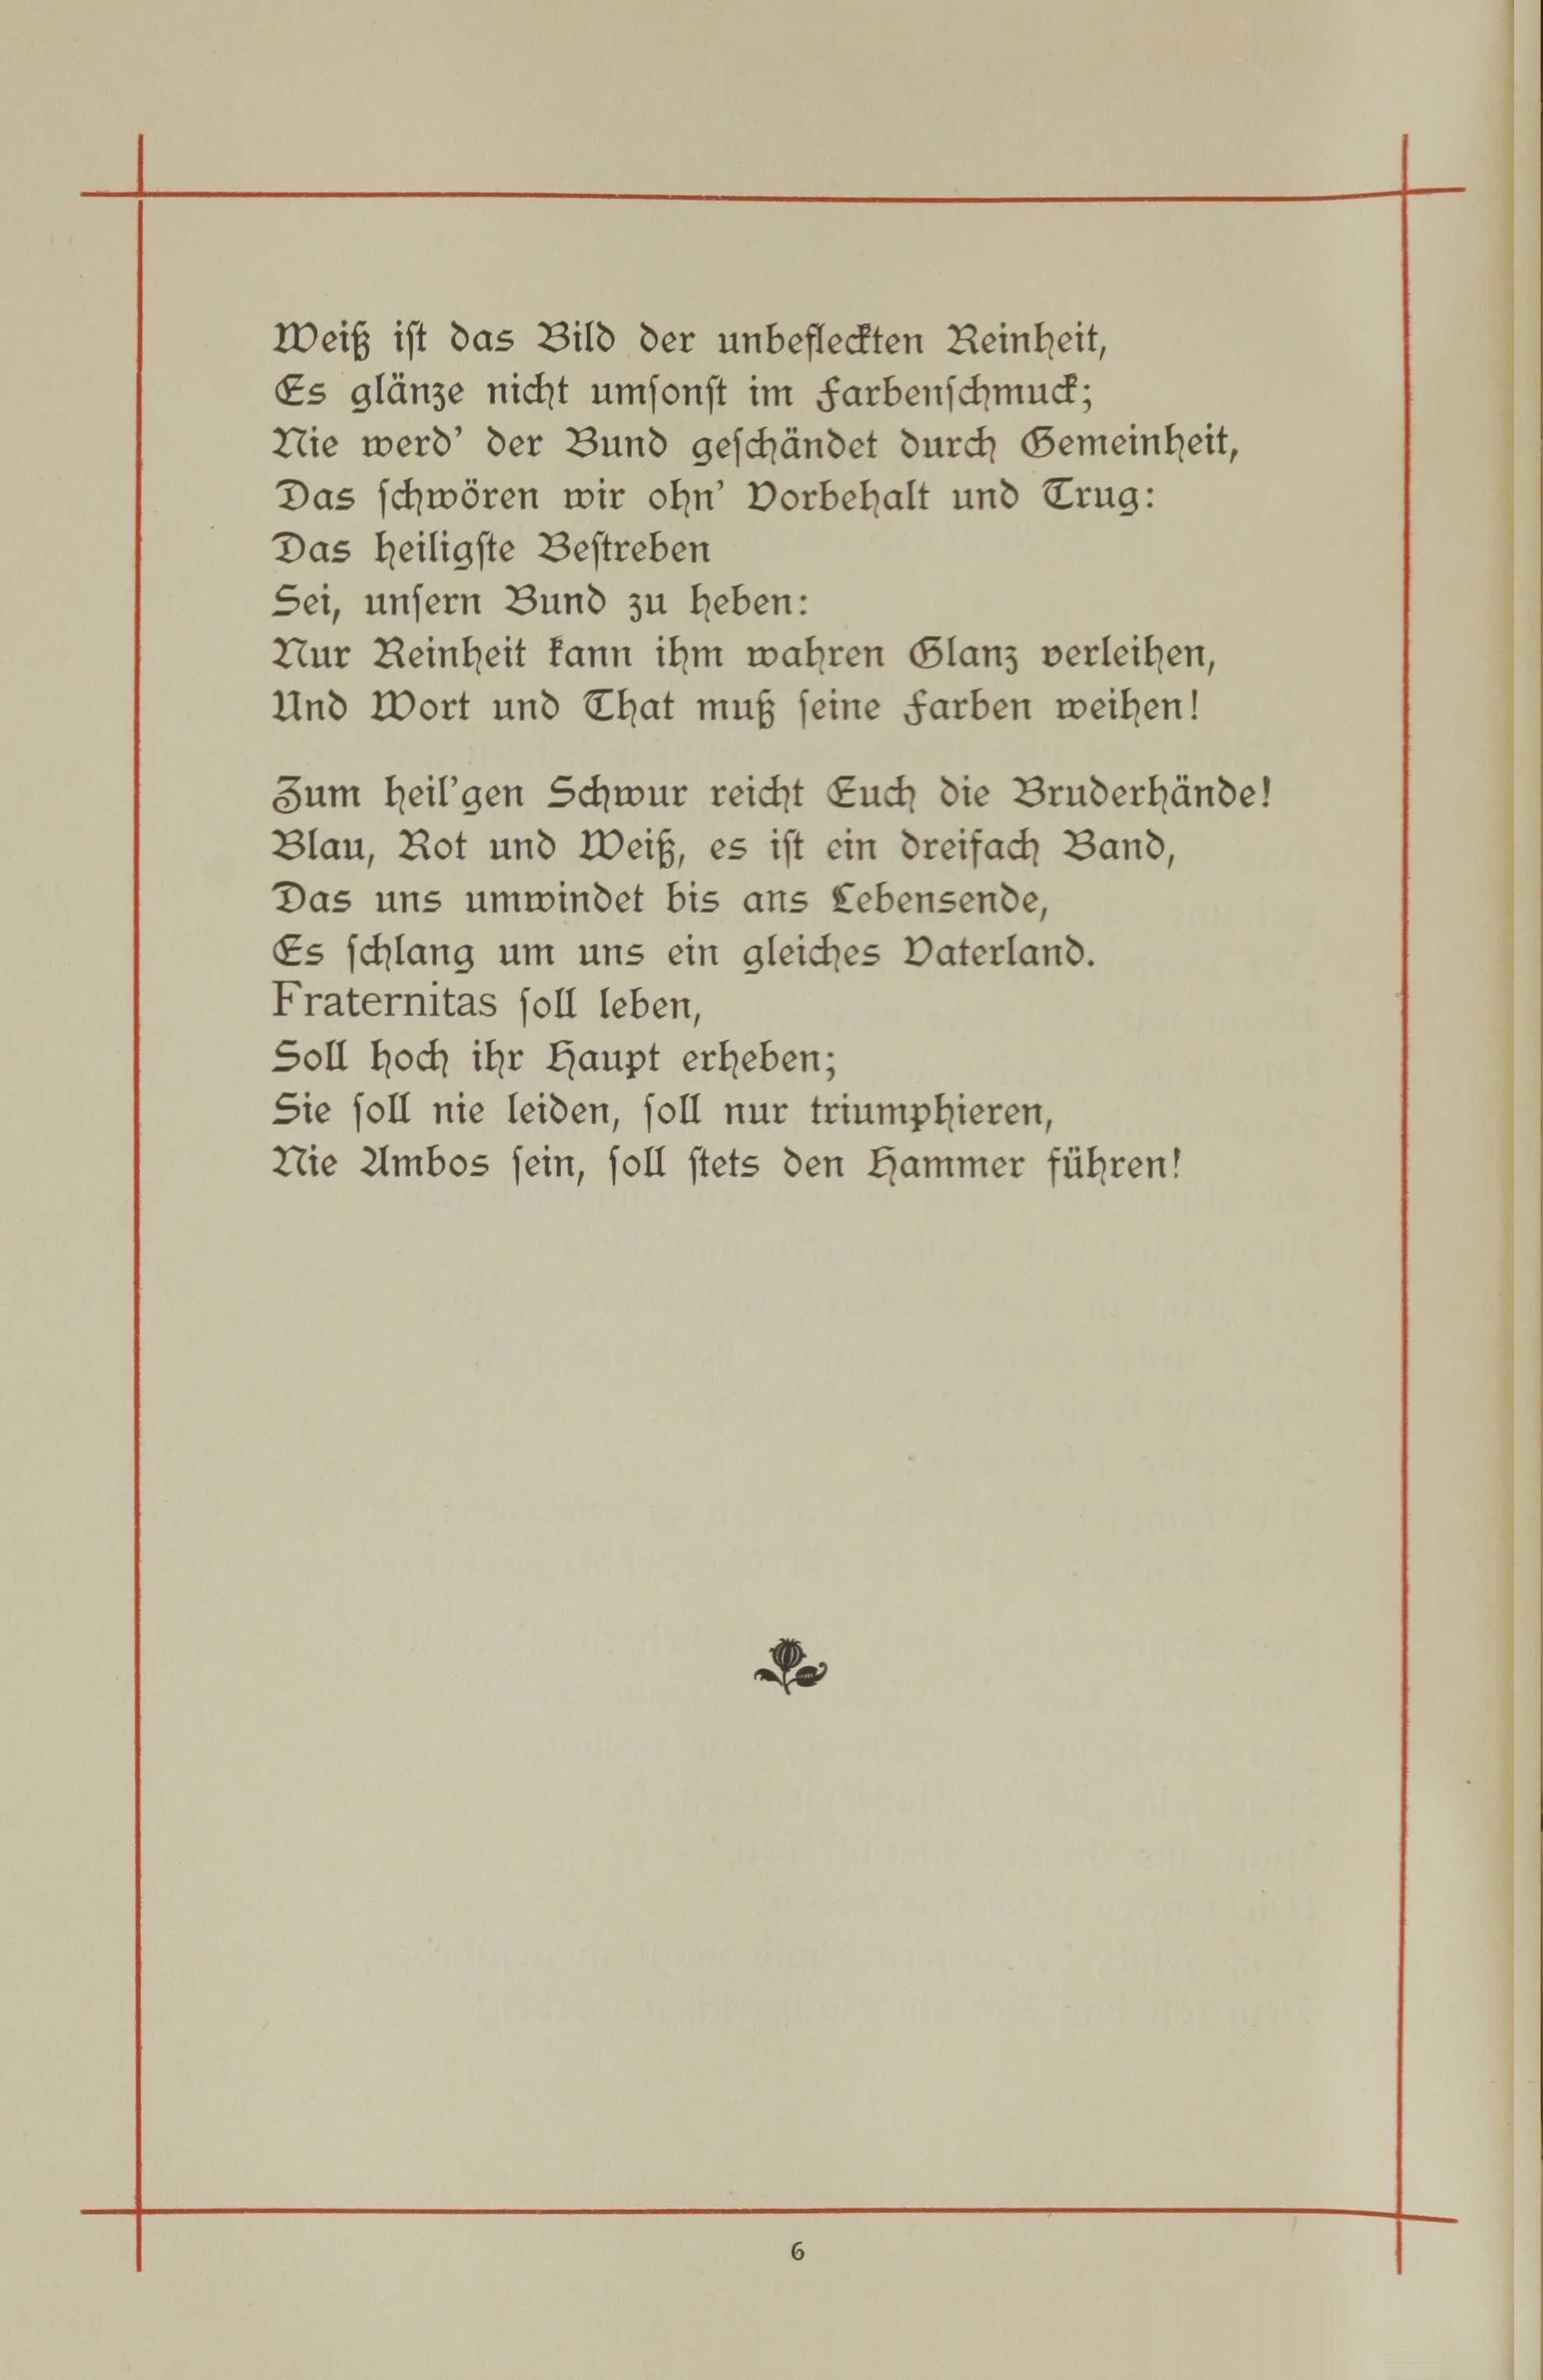 Farbenlied (1893) | 2. (6) Основной текст